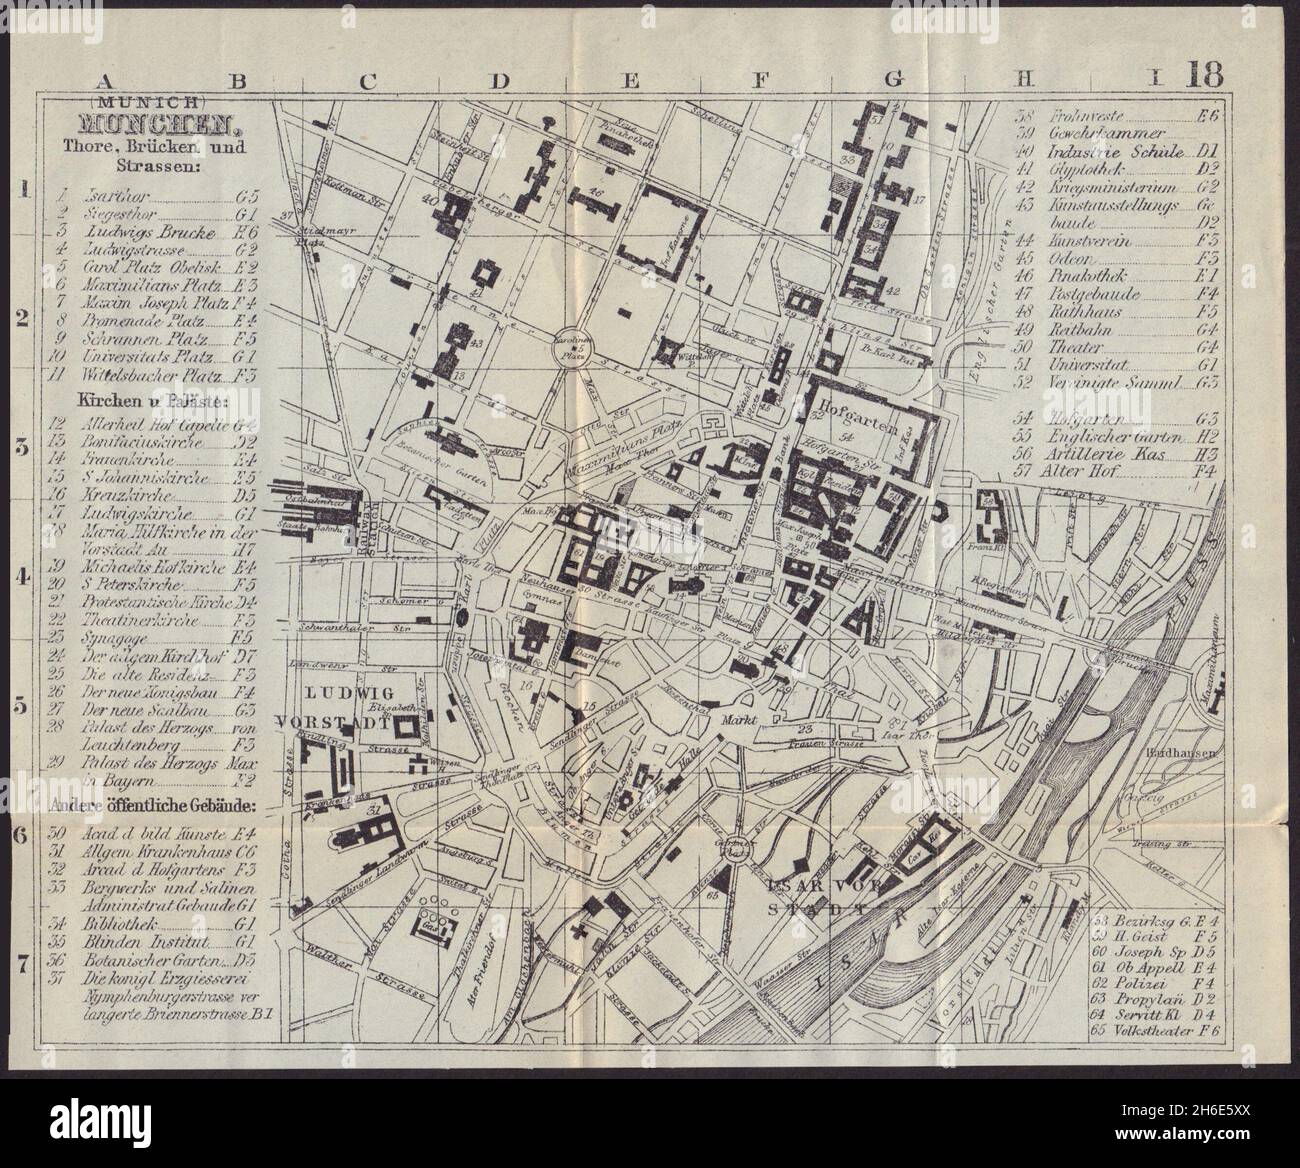 MUNICH MÜNCHEN MUNCHEN antique town plan city map. Germany. BRADSHAW 1892  Stock Photo - Alamy